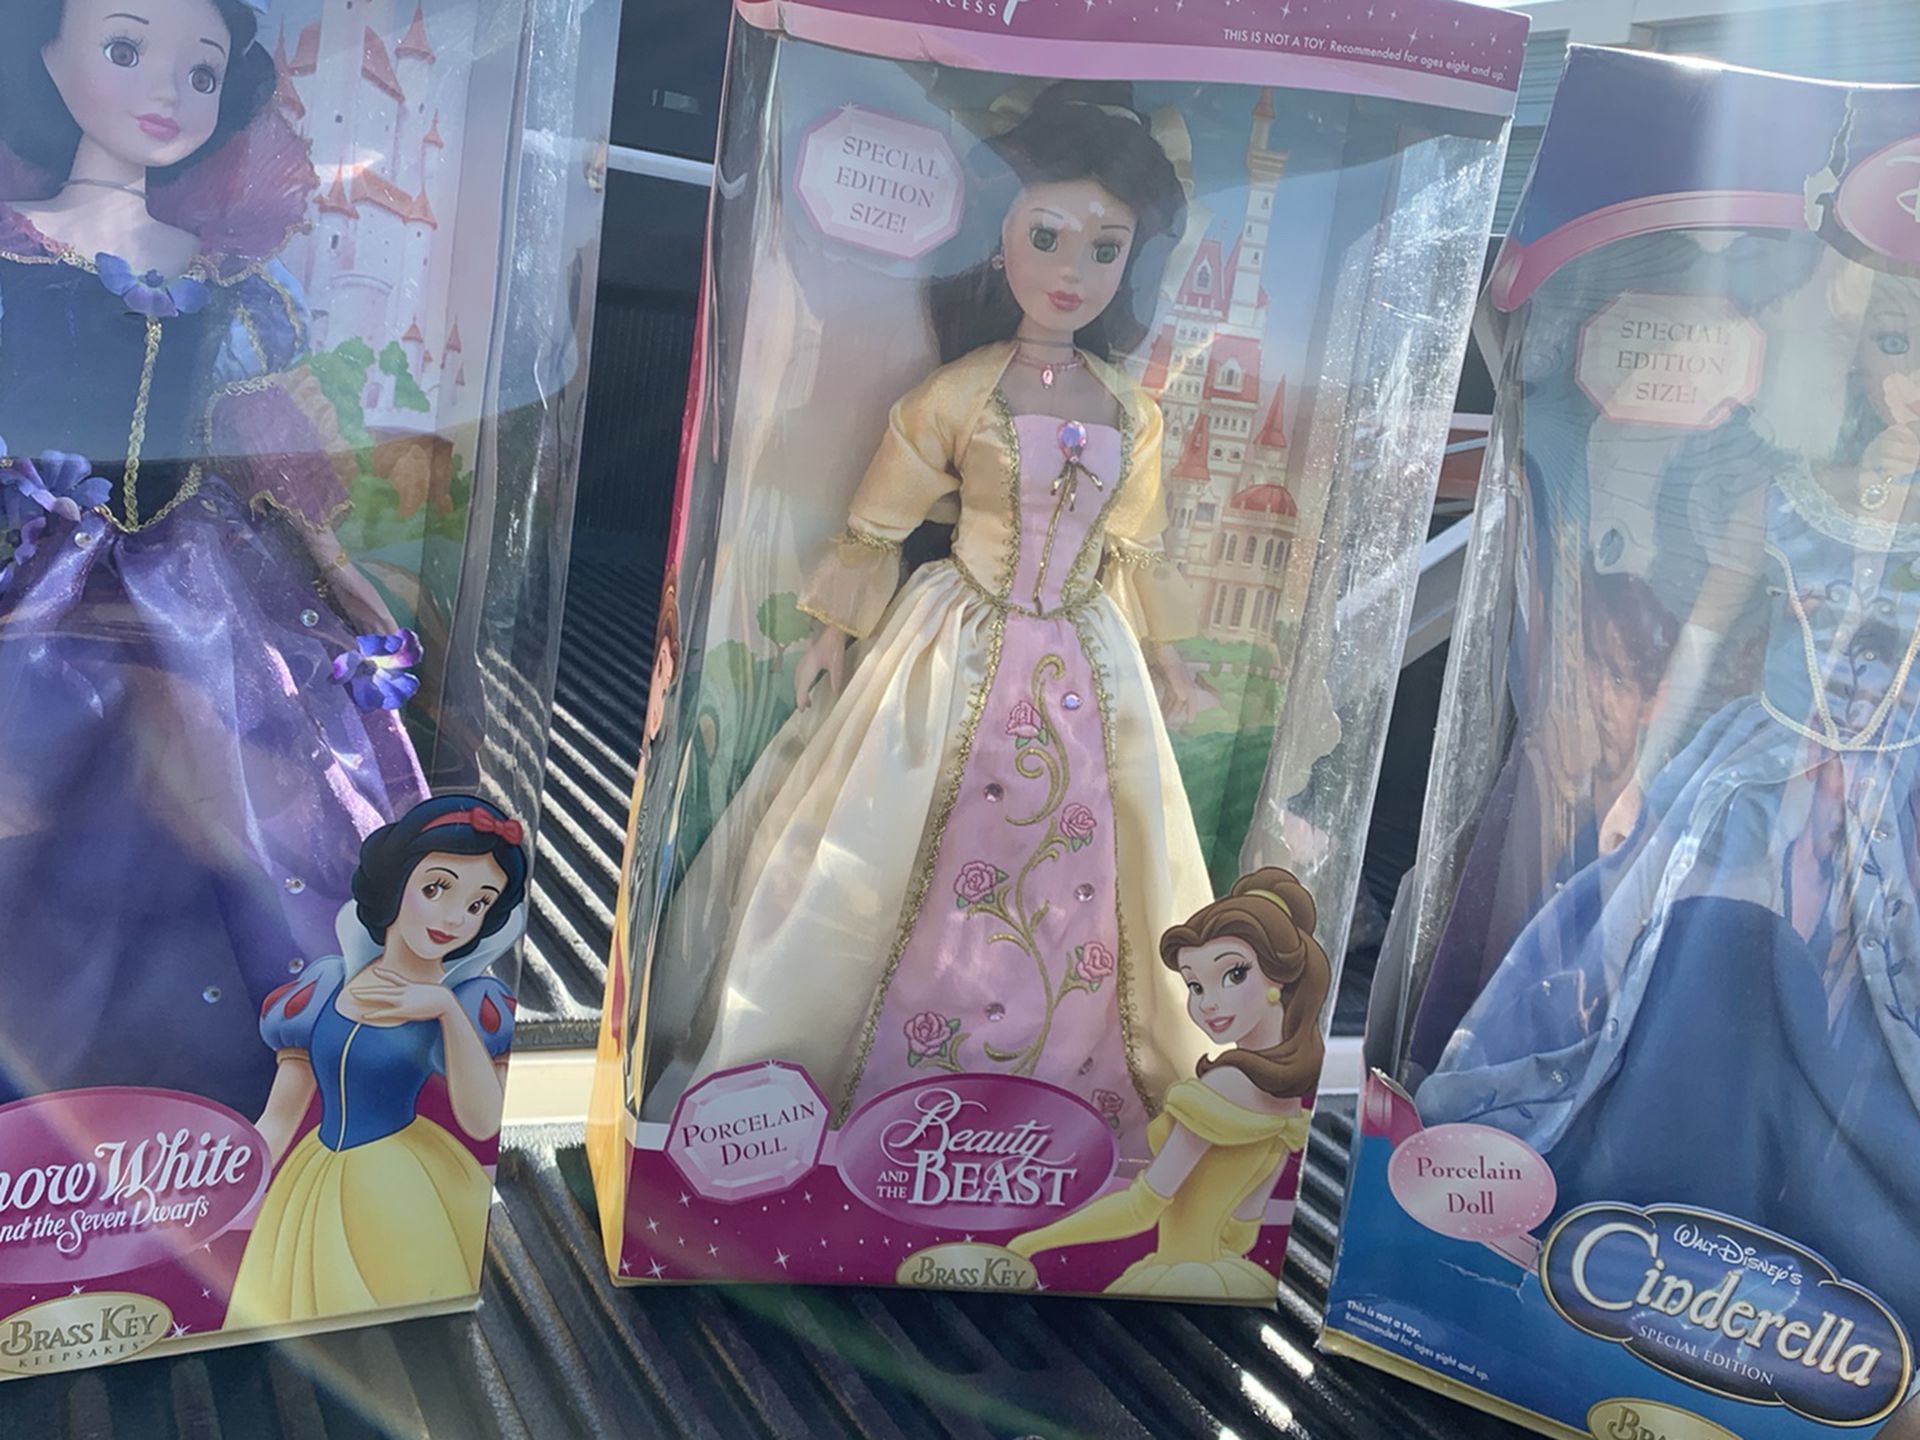 Disney Princess Dolls